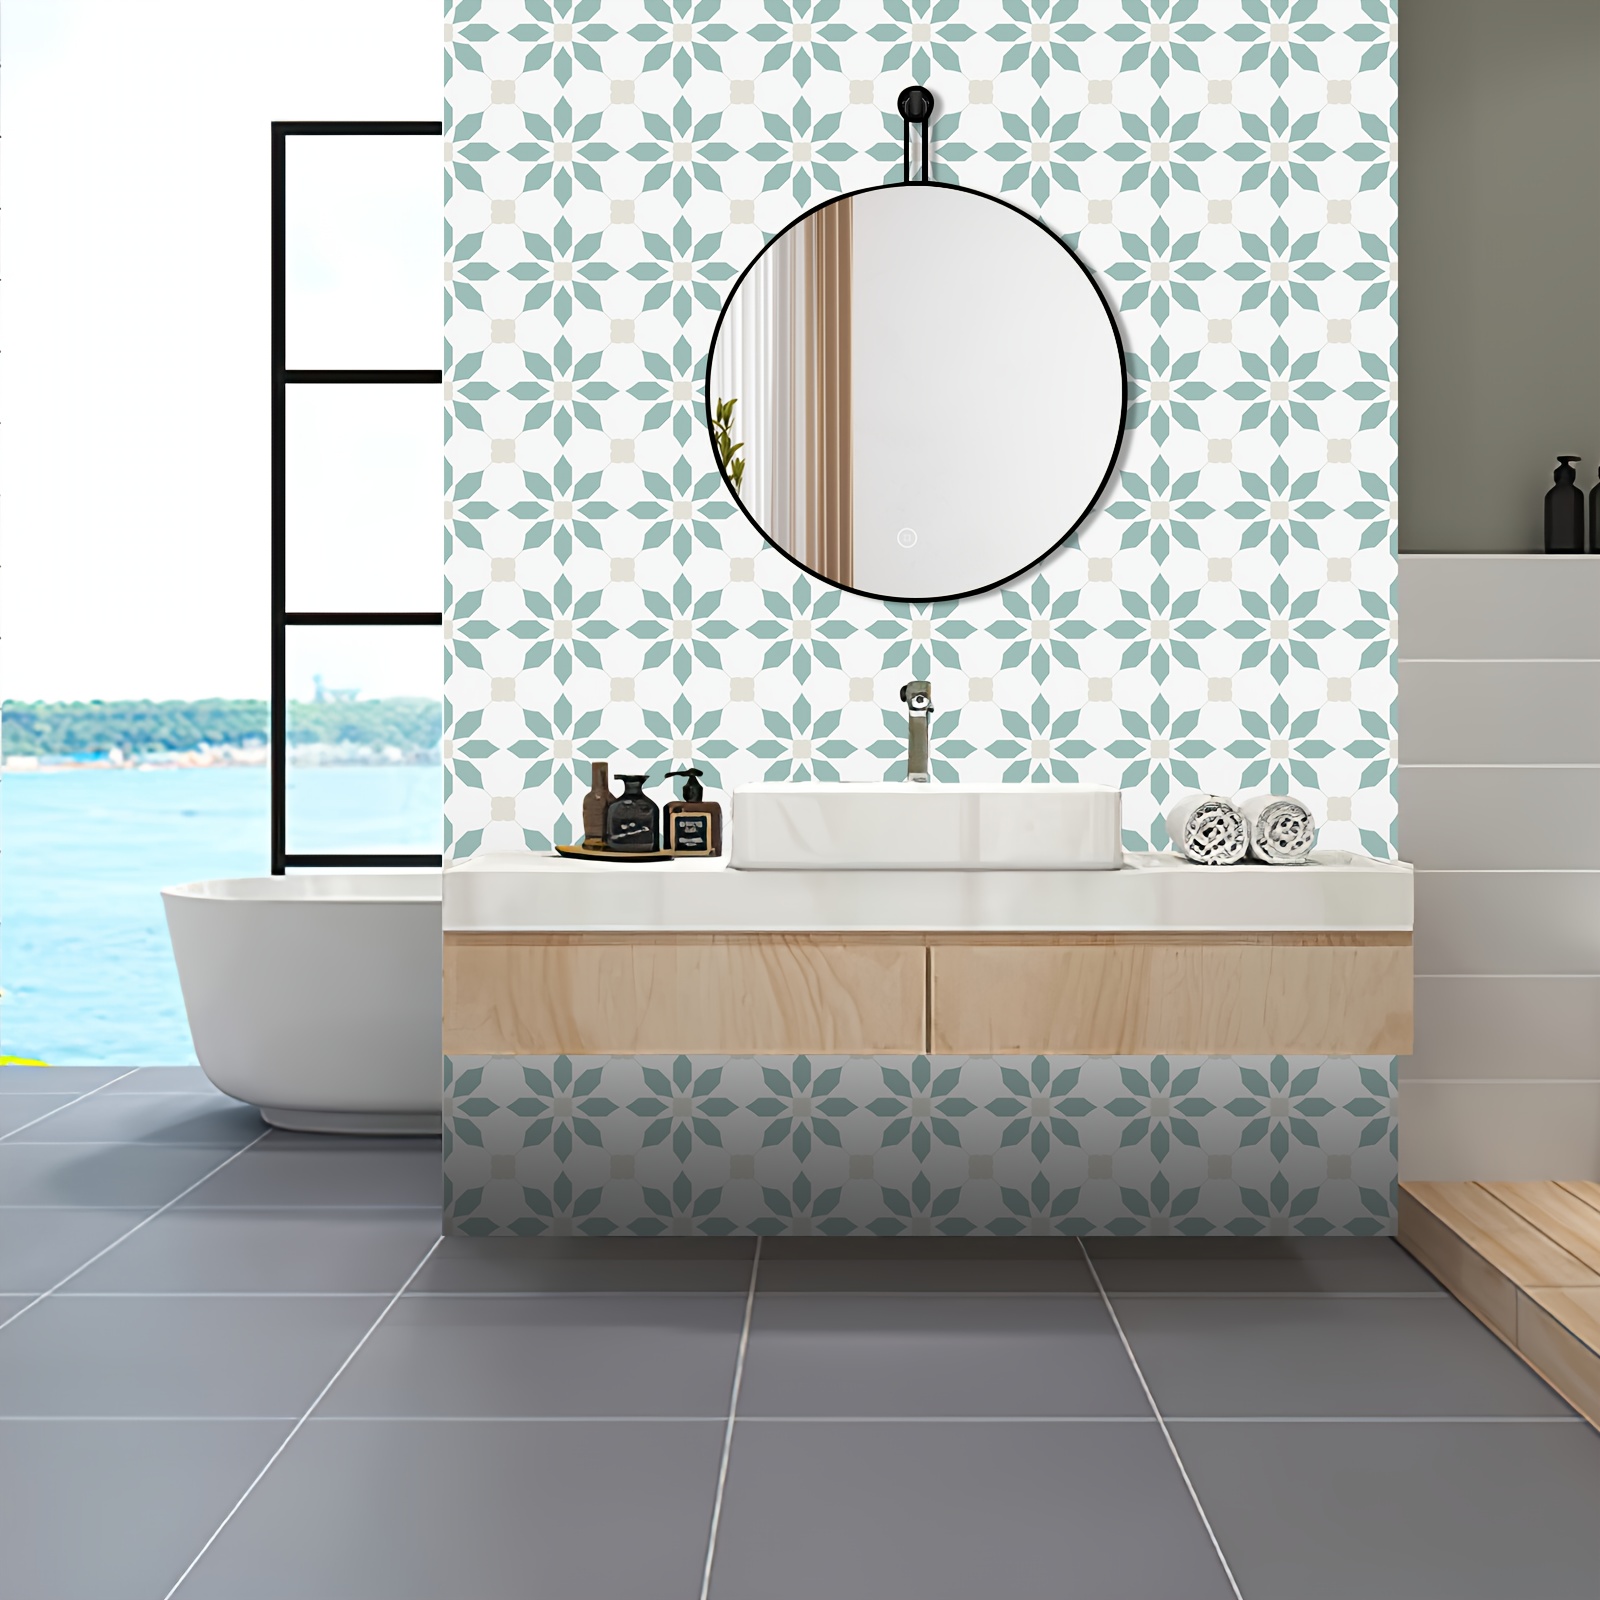 Livelynine Papel tapiz impermeable para baño, ducha, pared, papel de  contacto decorativo autoadhesivo para muebles, calcomanías de cocina,  azulejos de